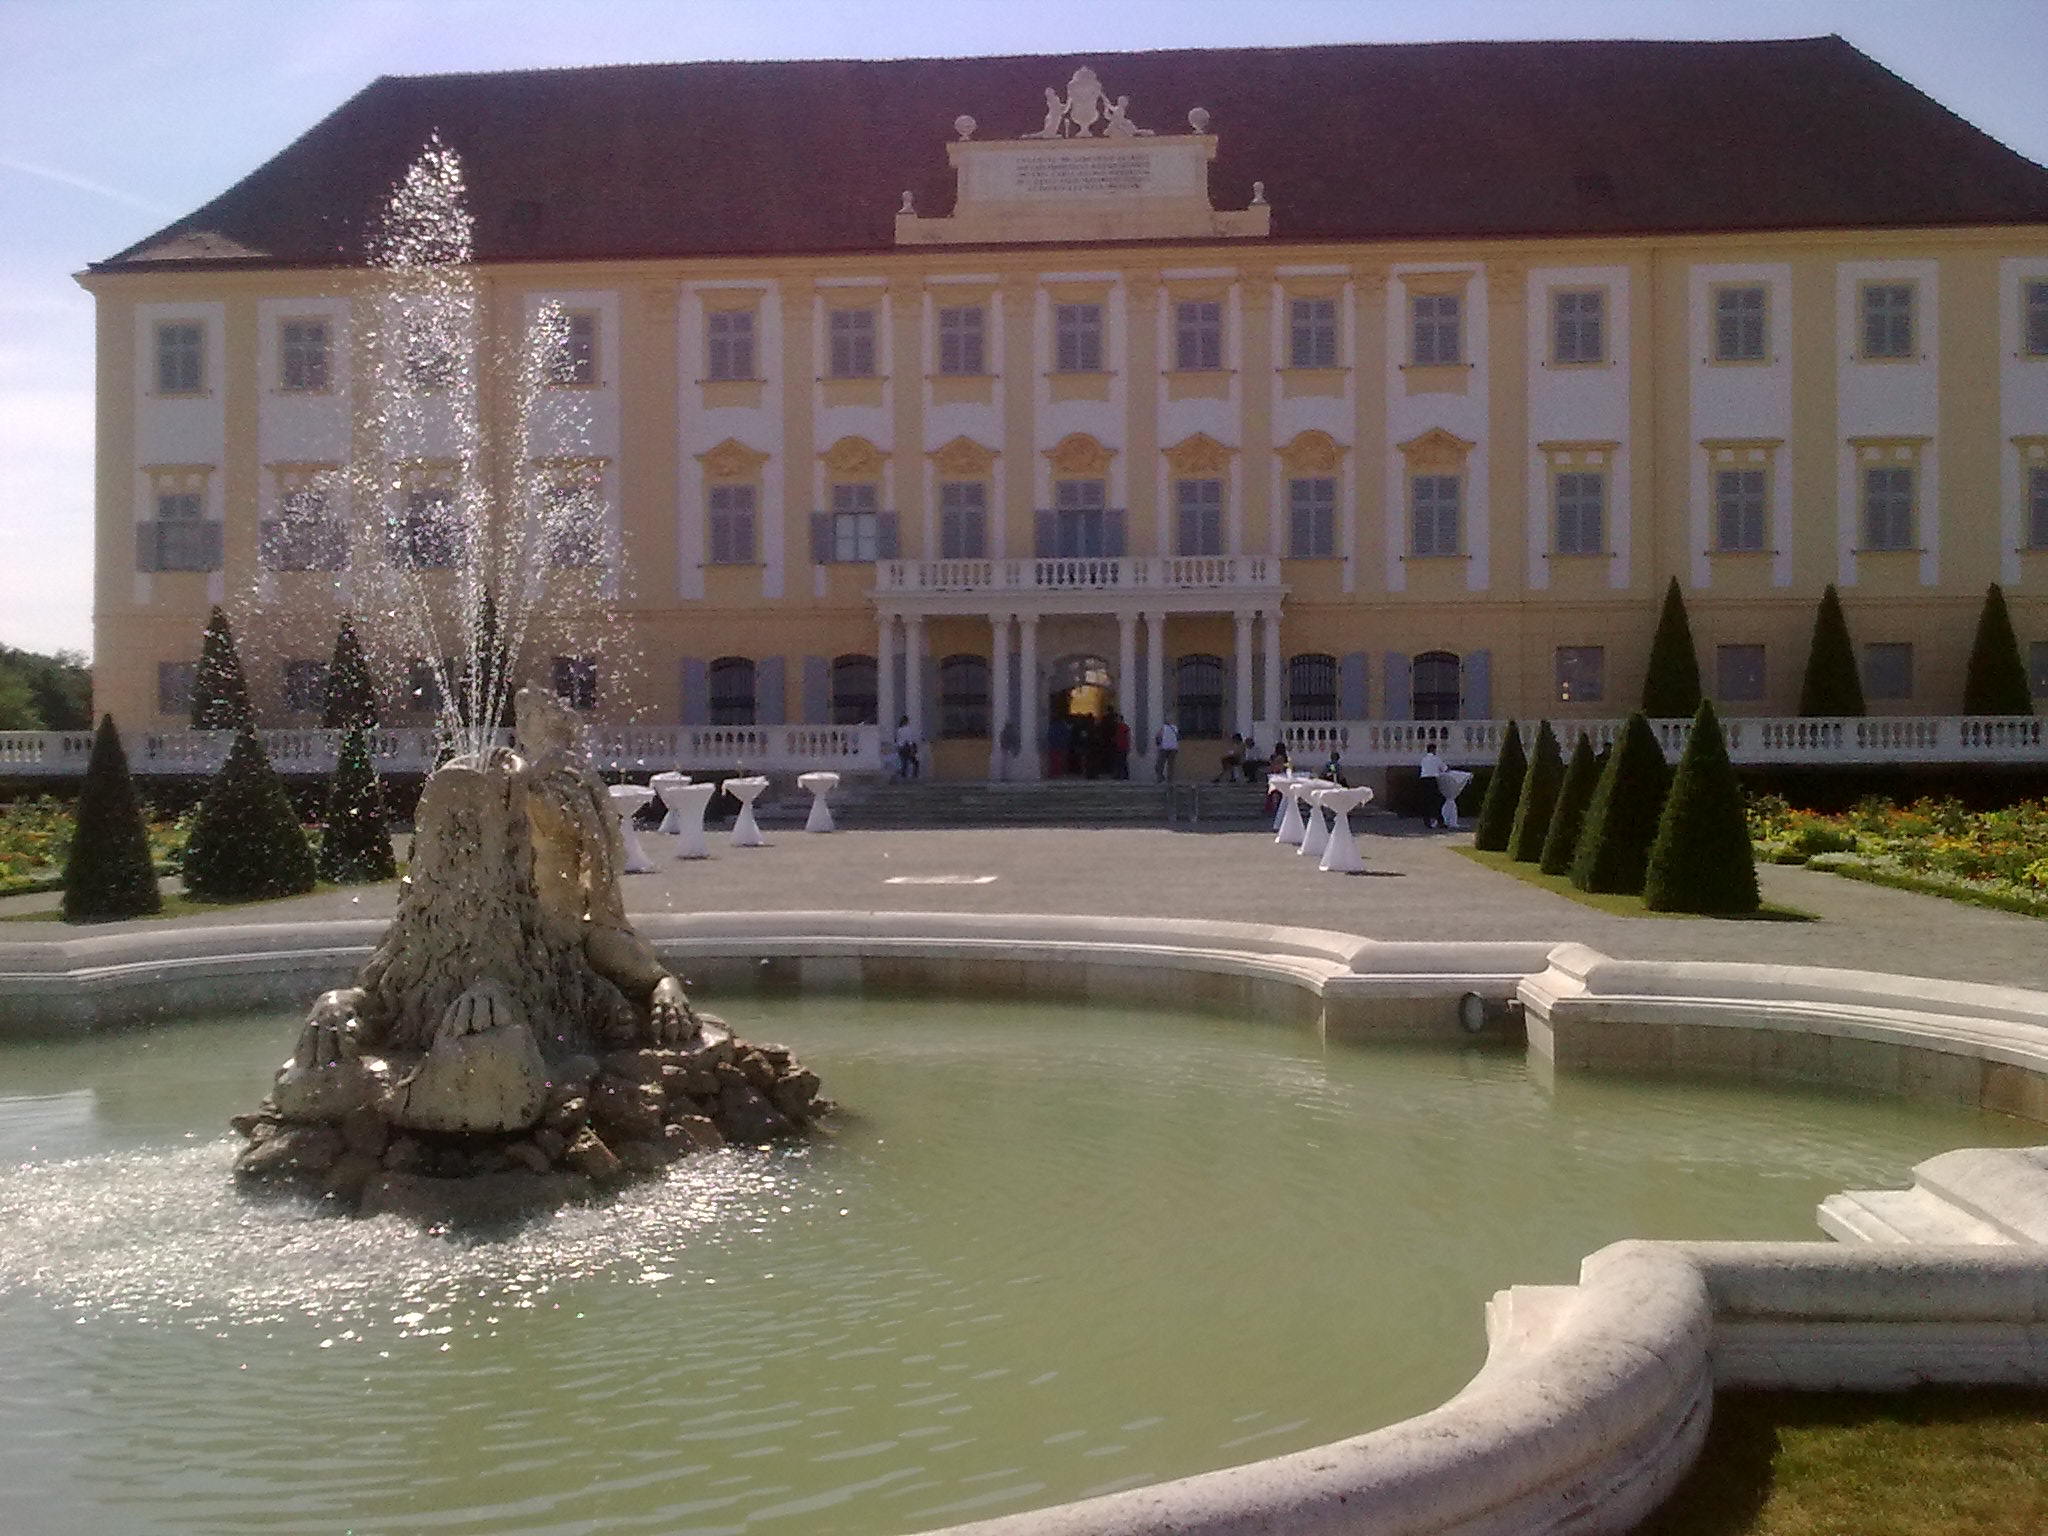 Schloss Hof 2